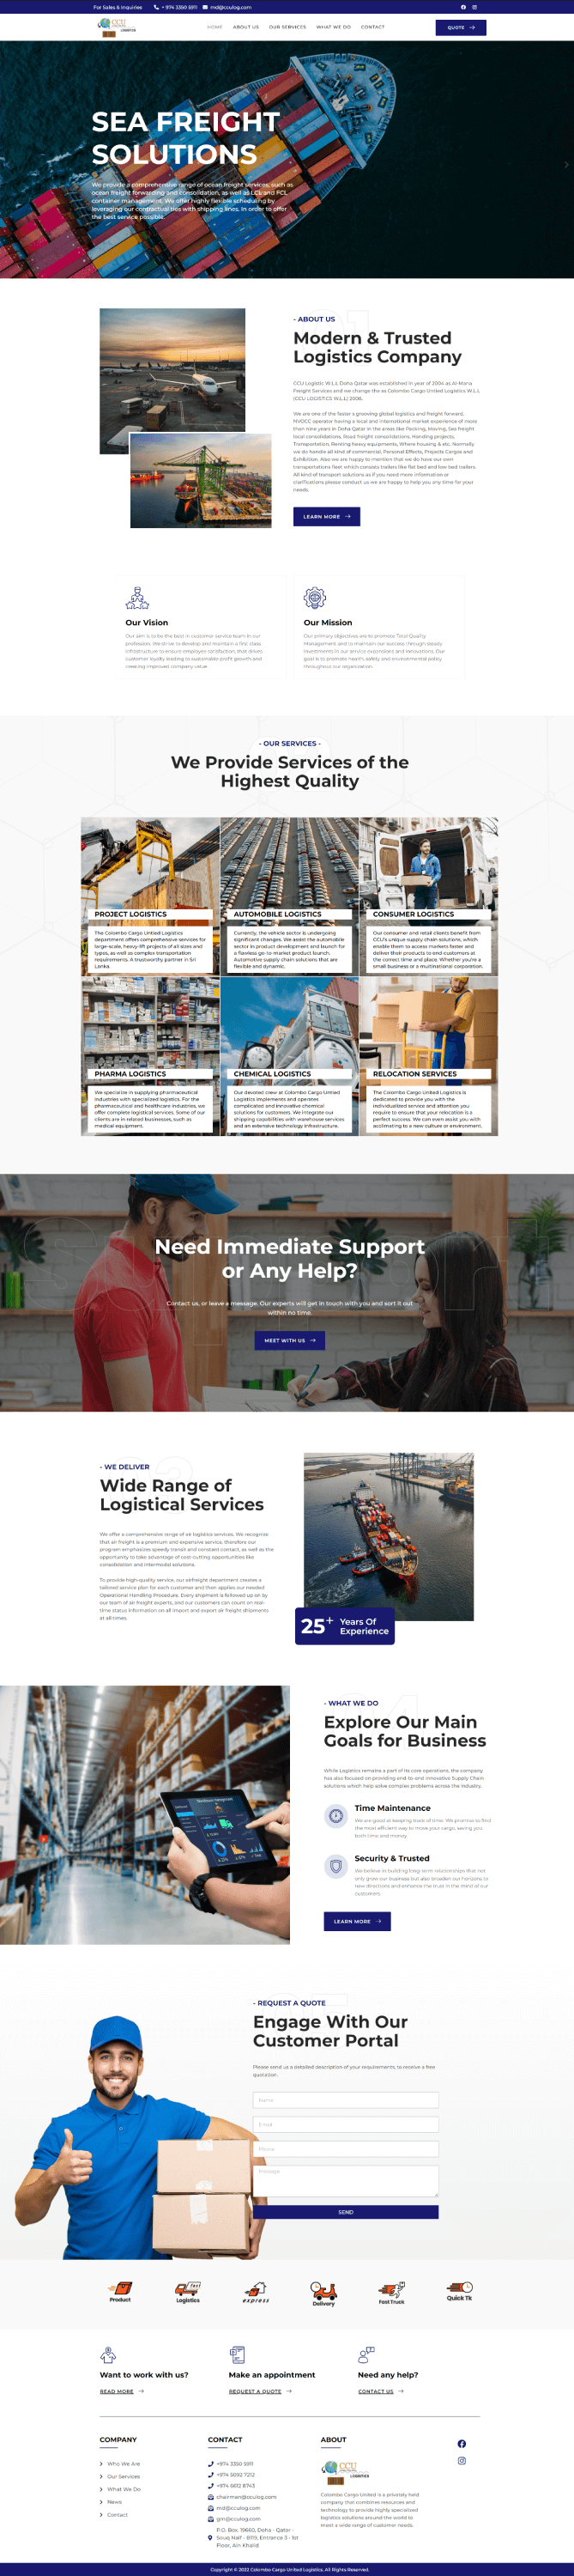 CCU-Logistics-home-page (1)